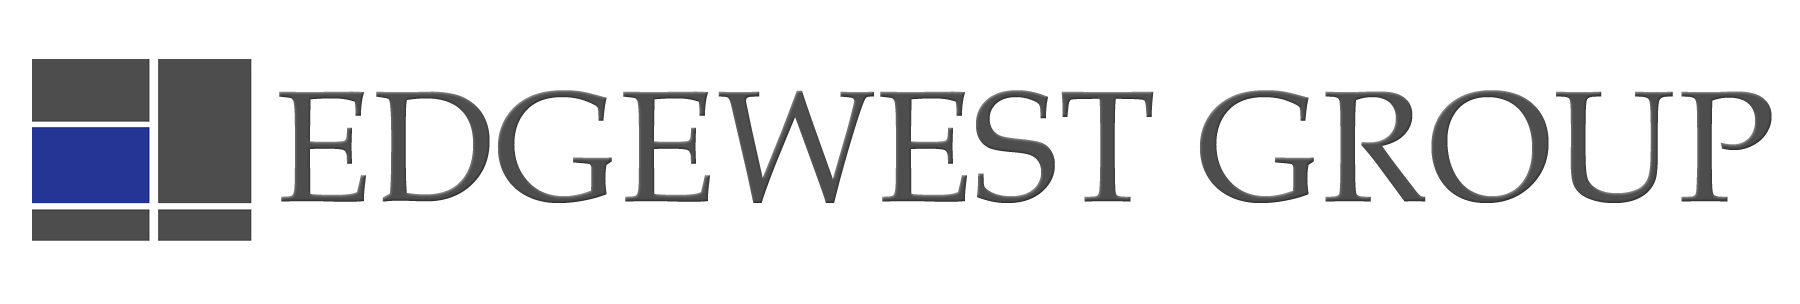 Edgewest Group